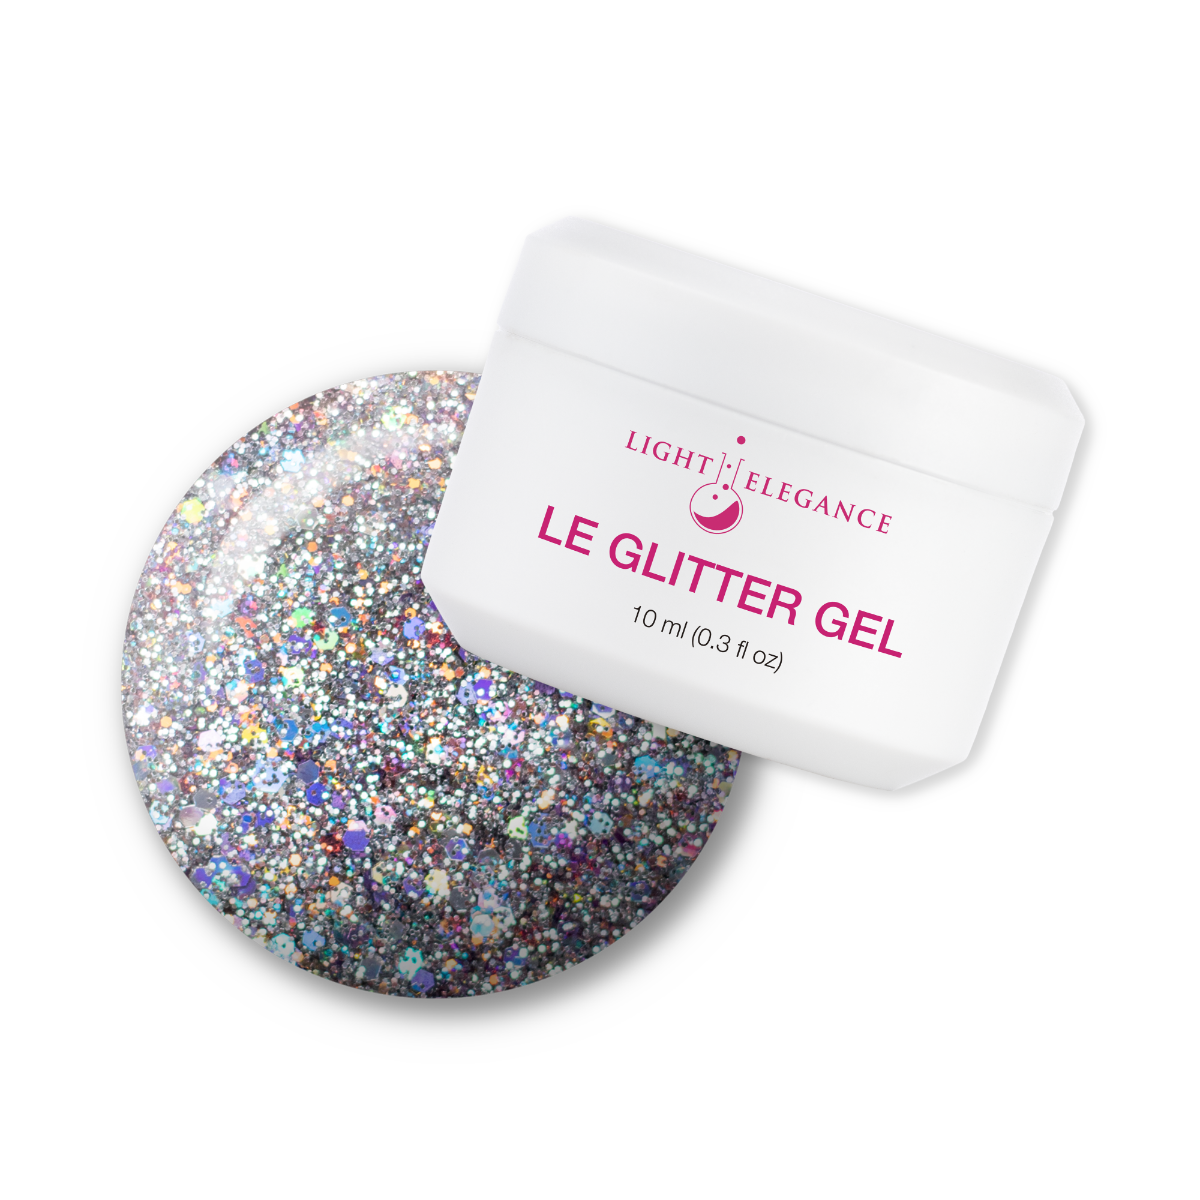 Light Elegance Glitter Gel - The Elvis Pelvis :: New Packaging - Creata Beauty - Professional Beauty Products